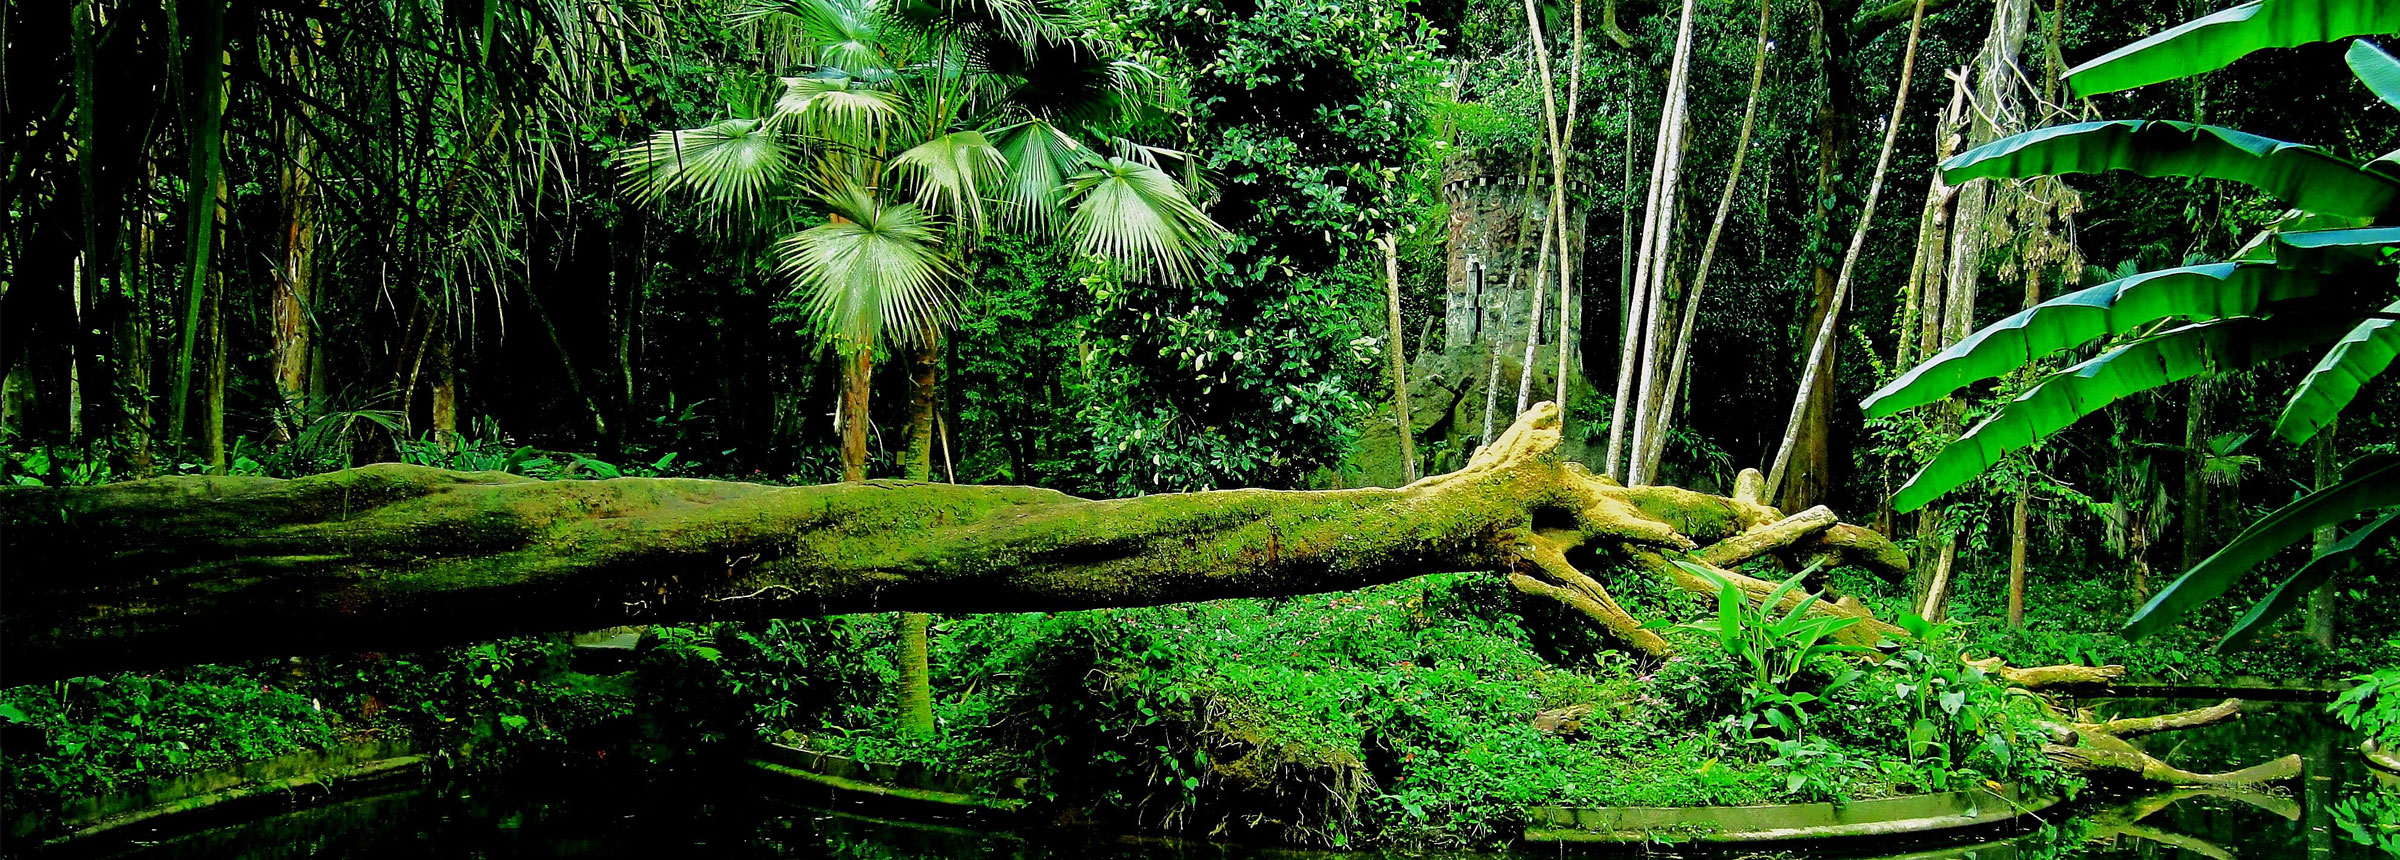 Amazon rainforest, Brazil